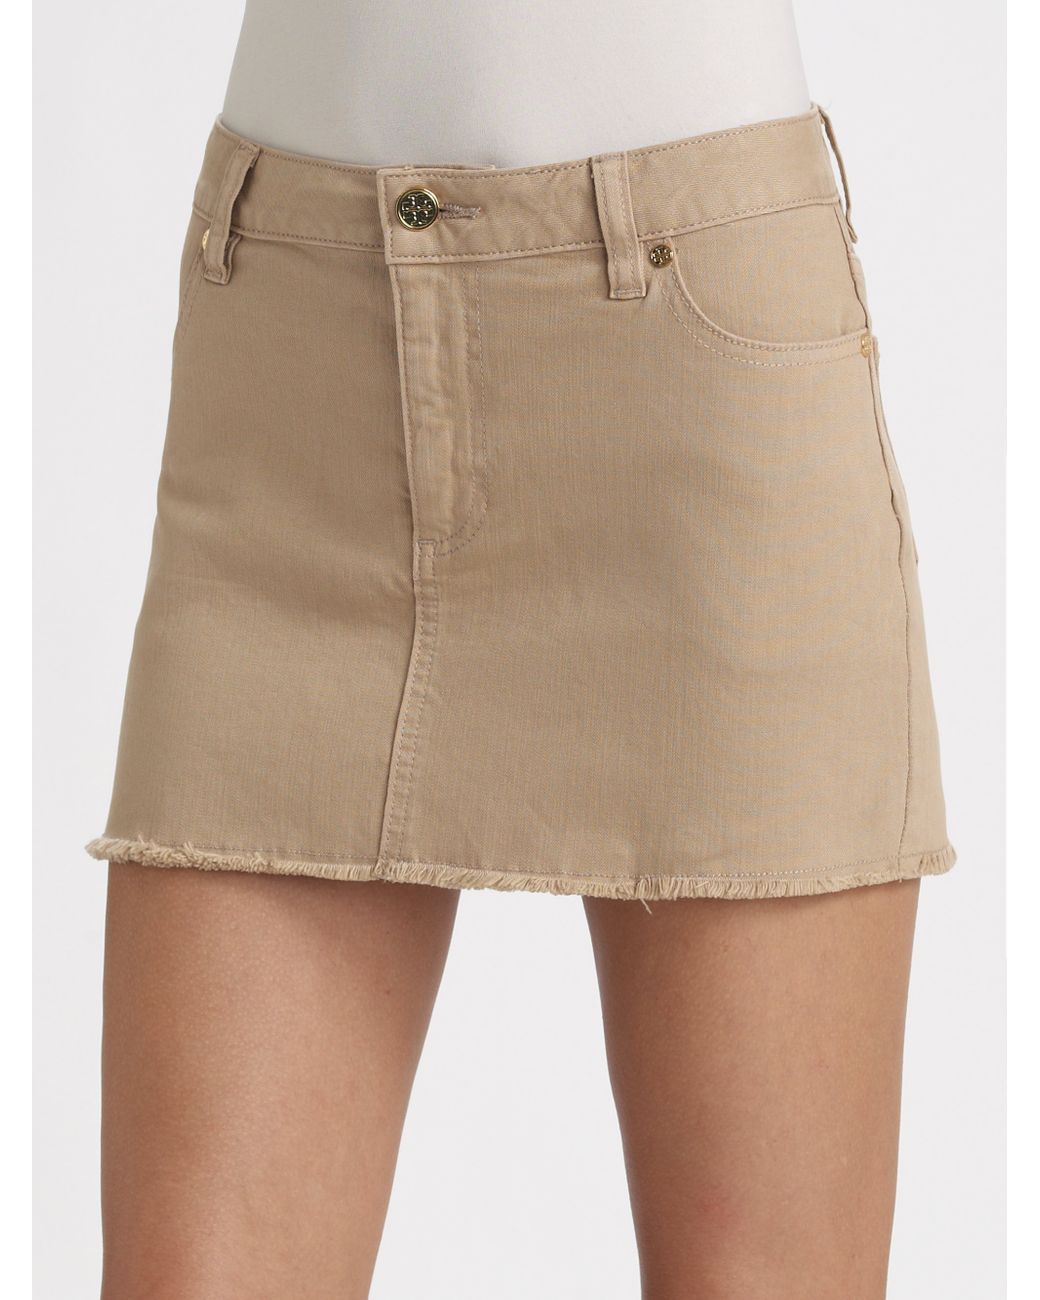 Tory Burch Denim Mini Skirt in Brown | Lyst